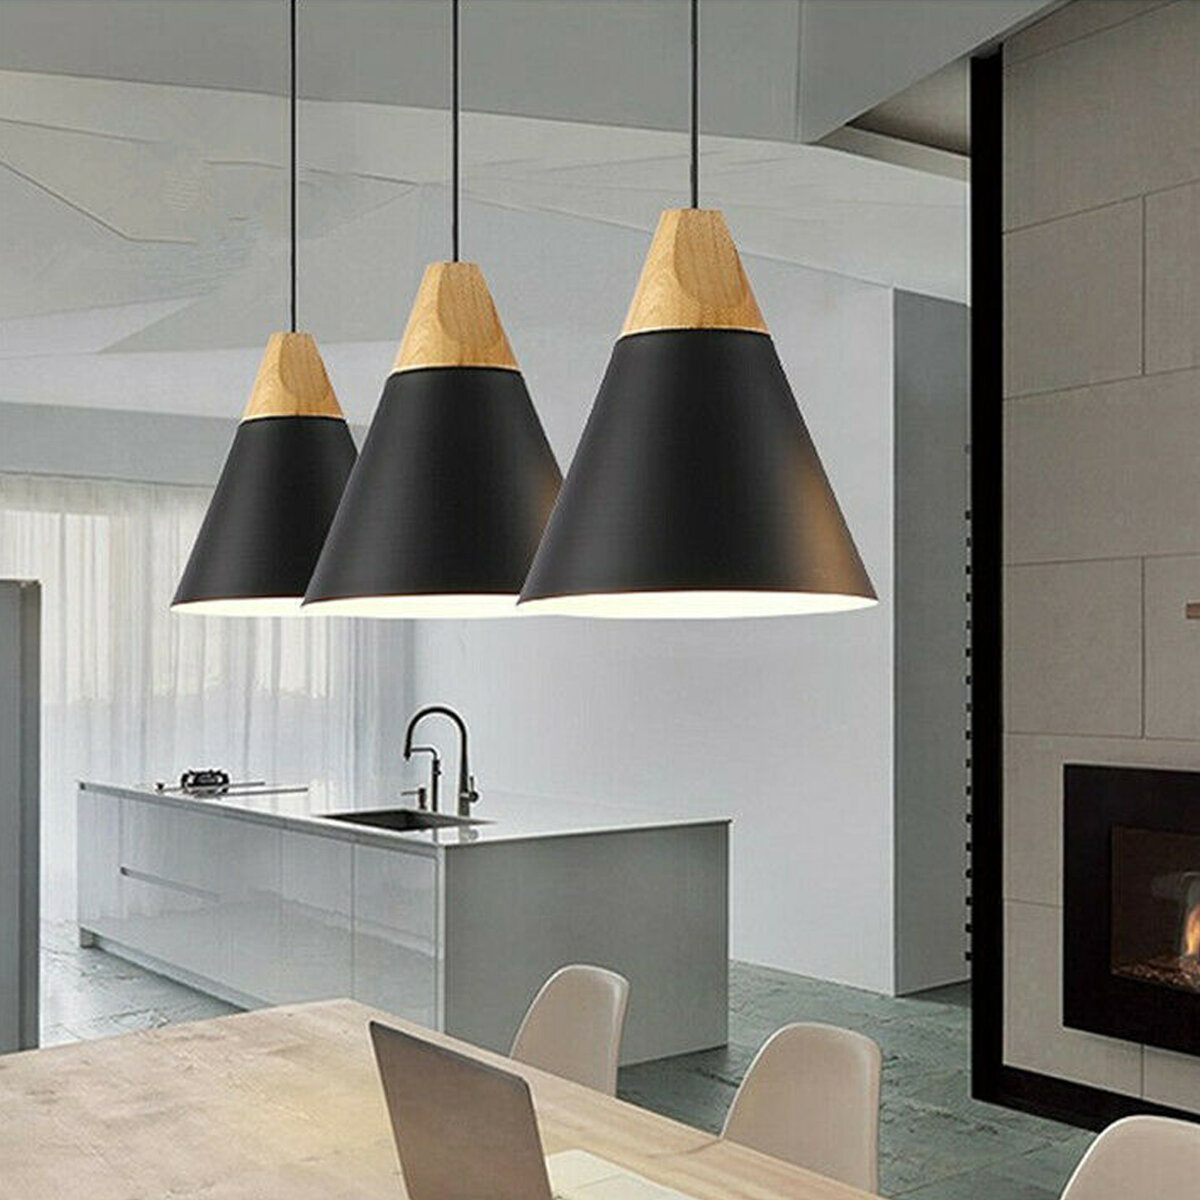 Modern Pendant Lighting Nordic, Hanging Lights For Dining Table Singapore